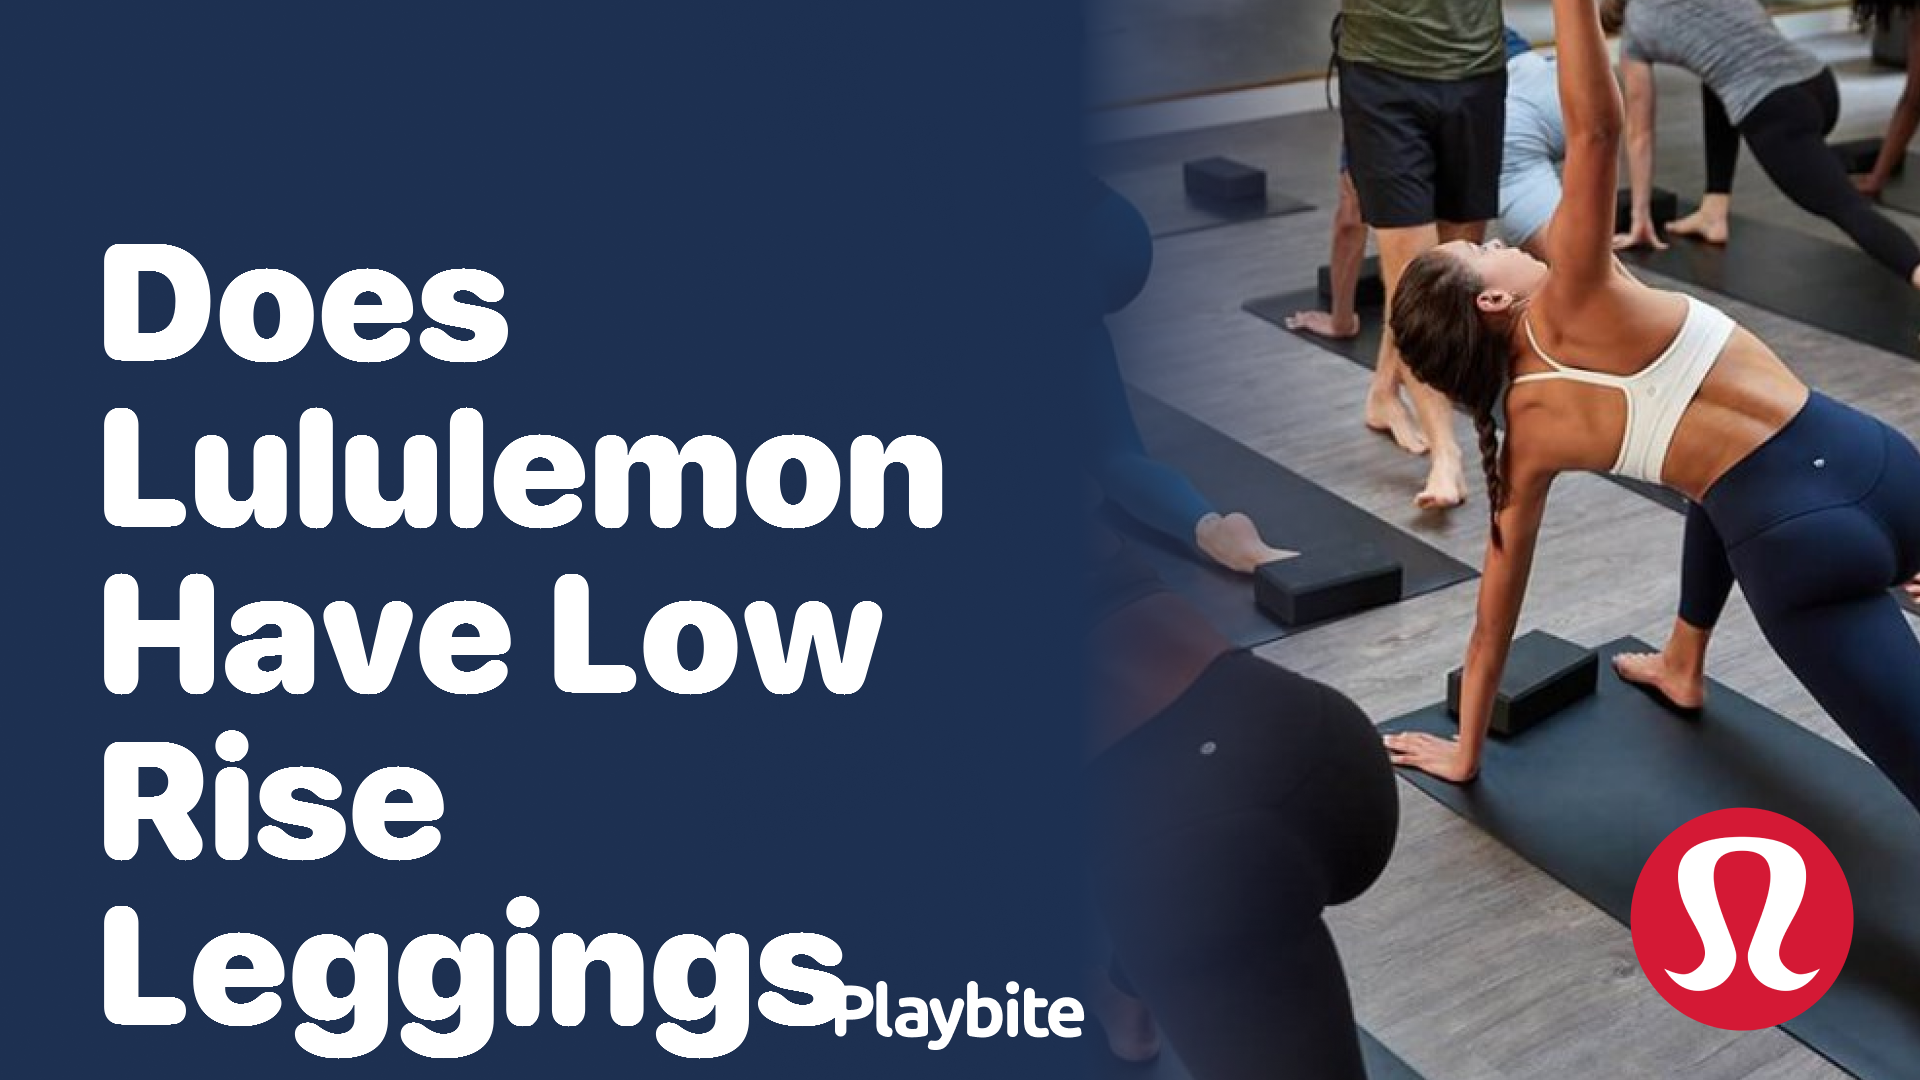 Does Lululemon Have Low Rise Leggings? - Playbite